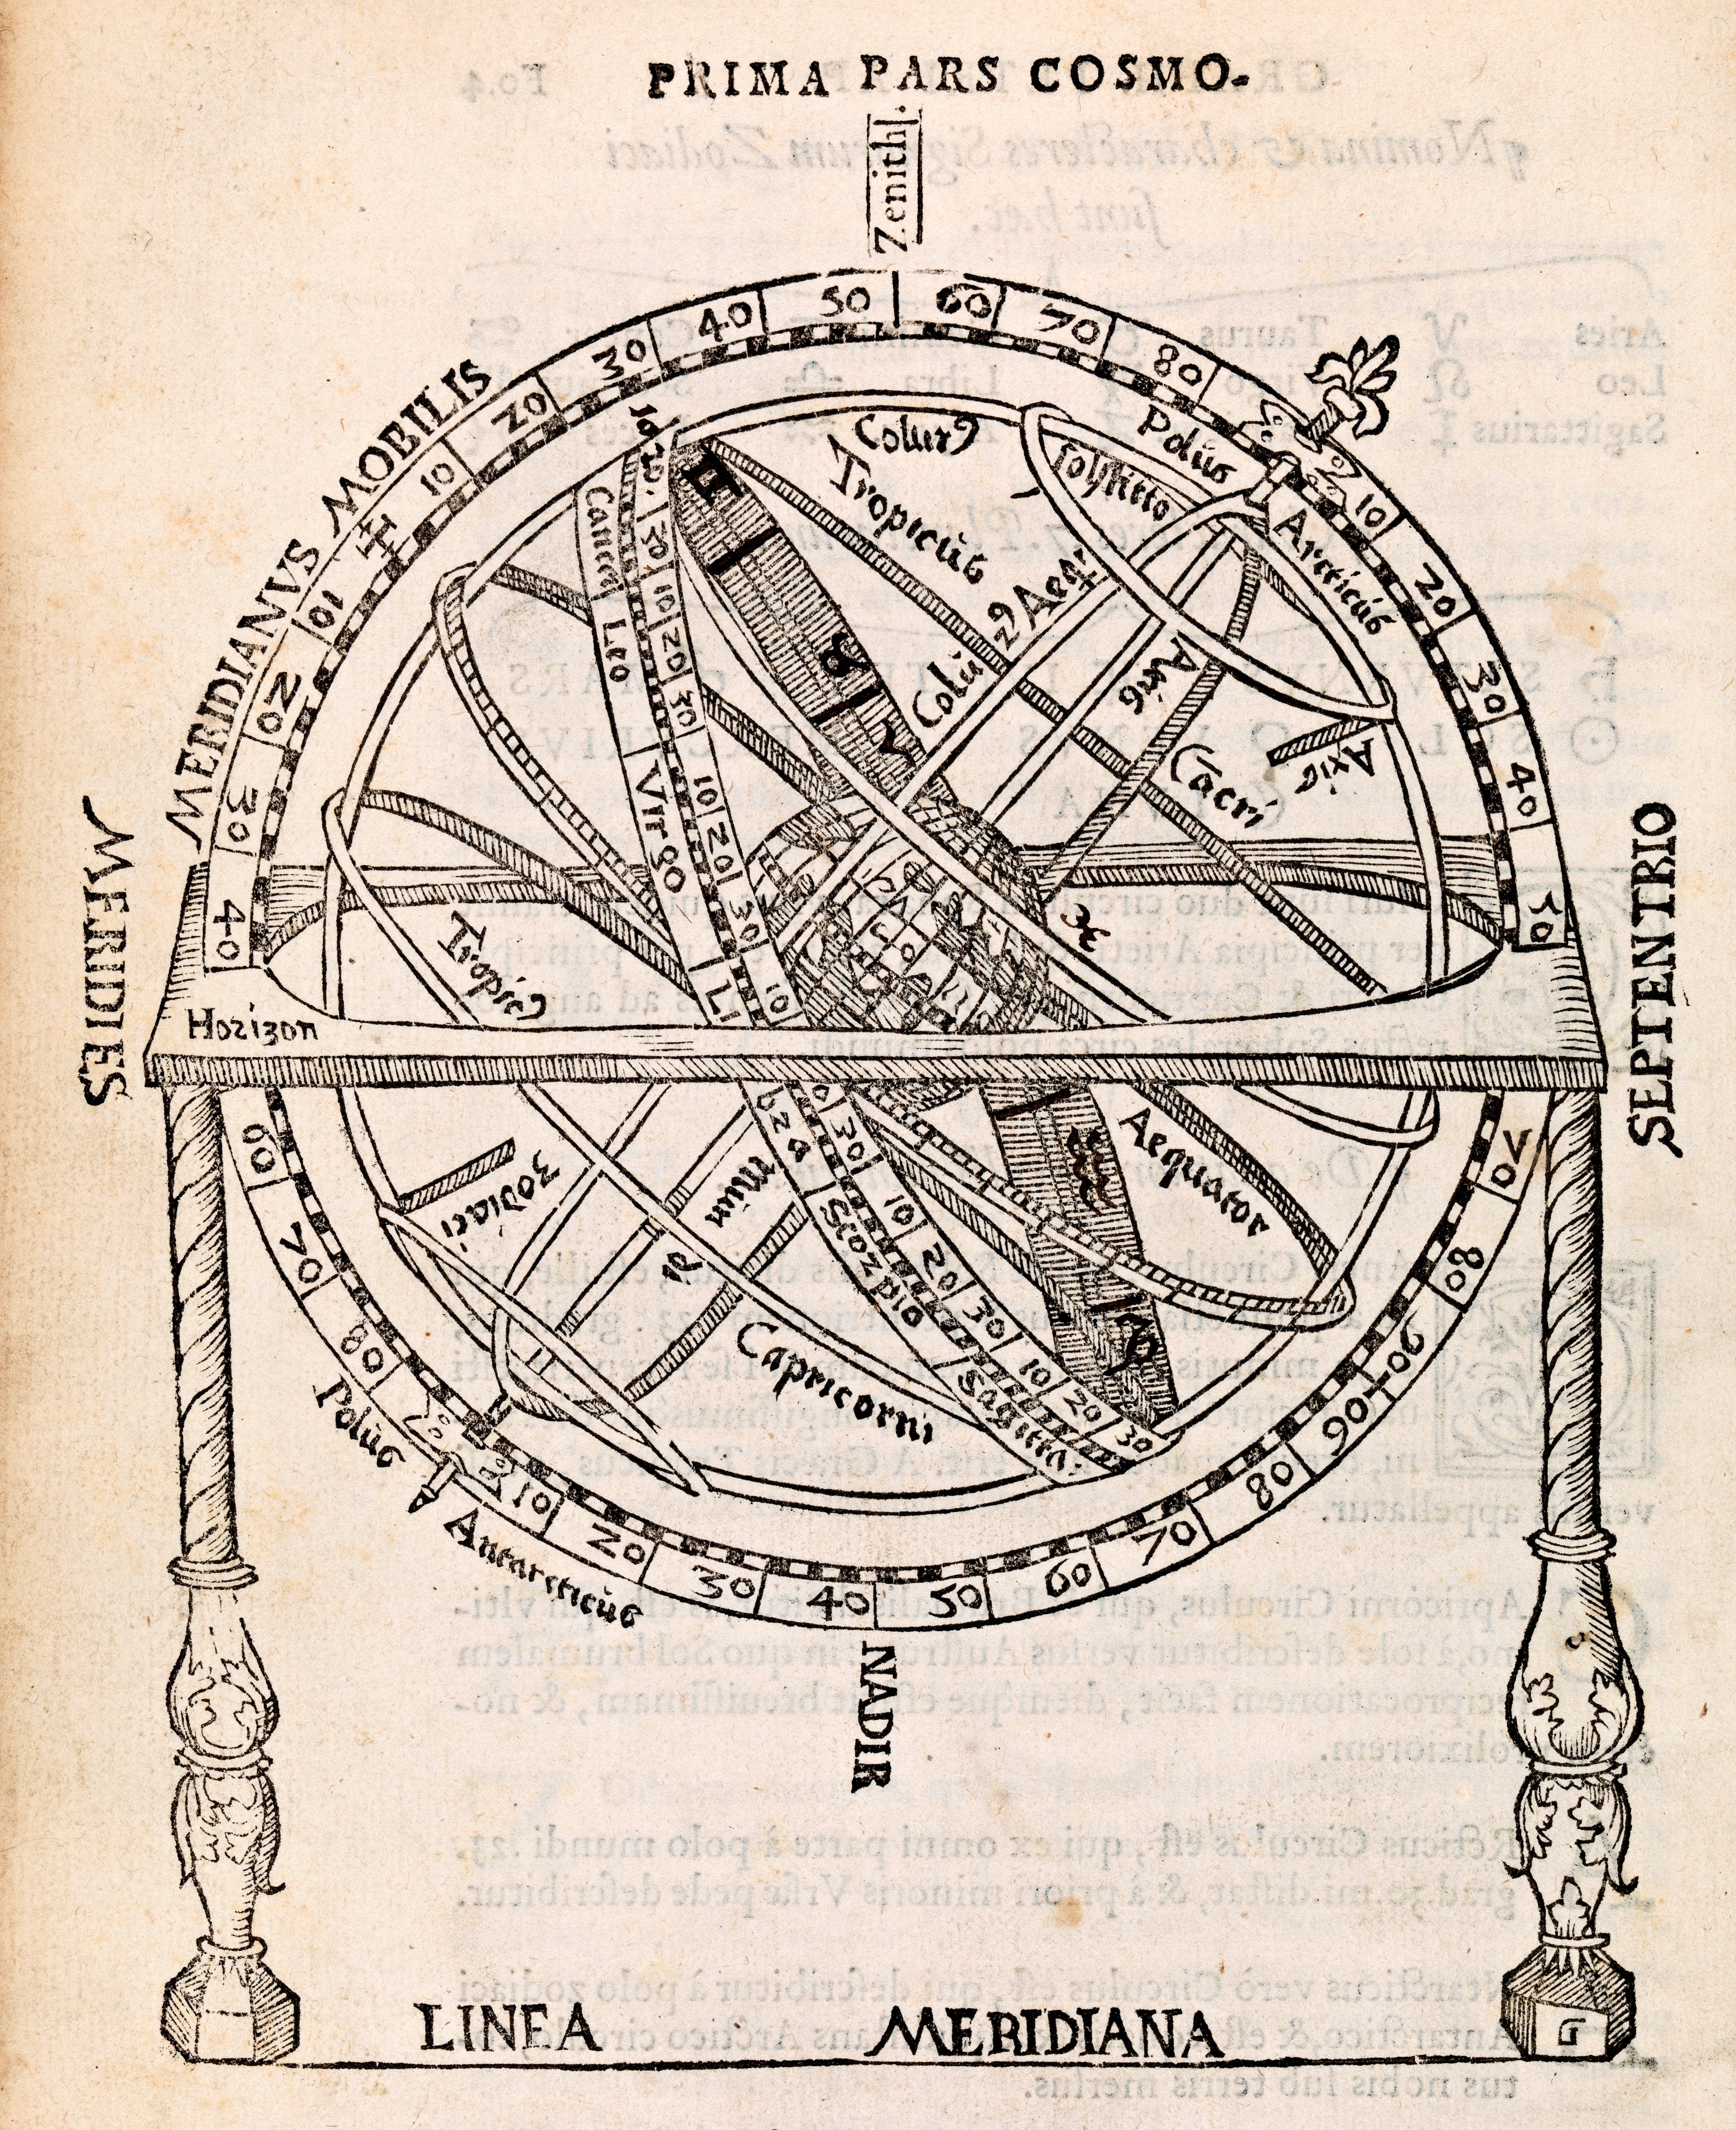 Peter Apian, Prima Pars Cosmo i Cosmographia, 1550. Nasjonalbiblioteket.